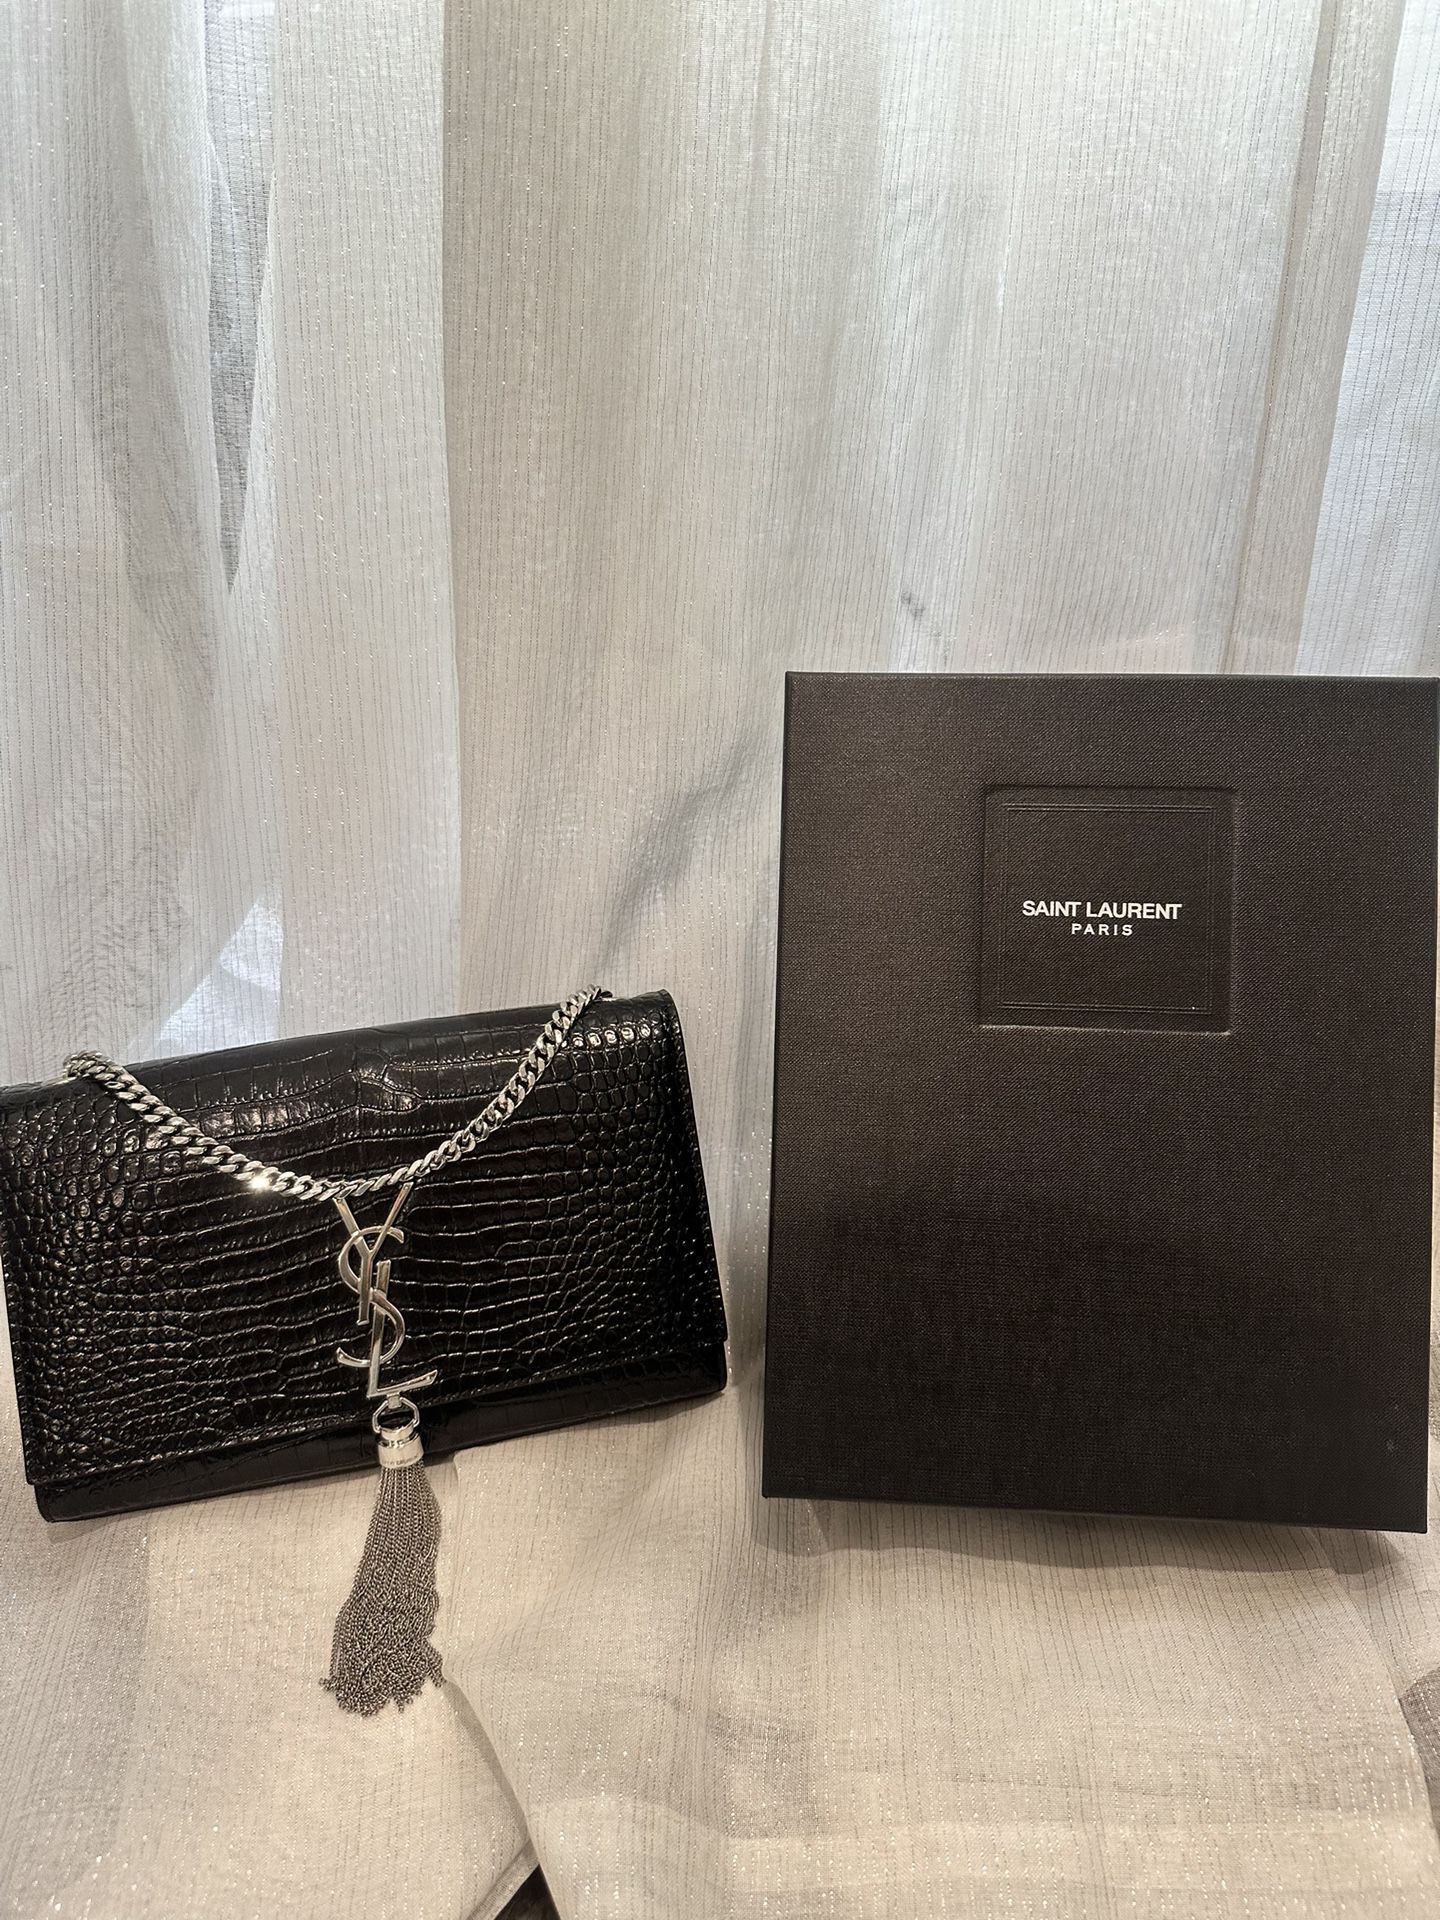 Yves Saint Laurent Croc Embossed Bag Original Price $3,000